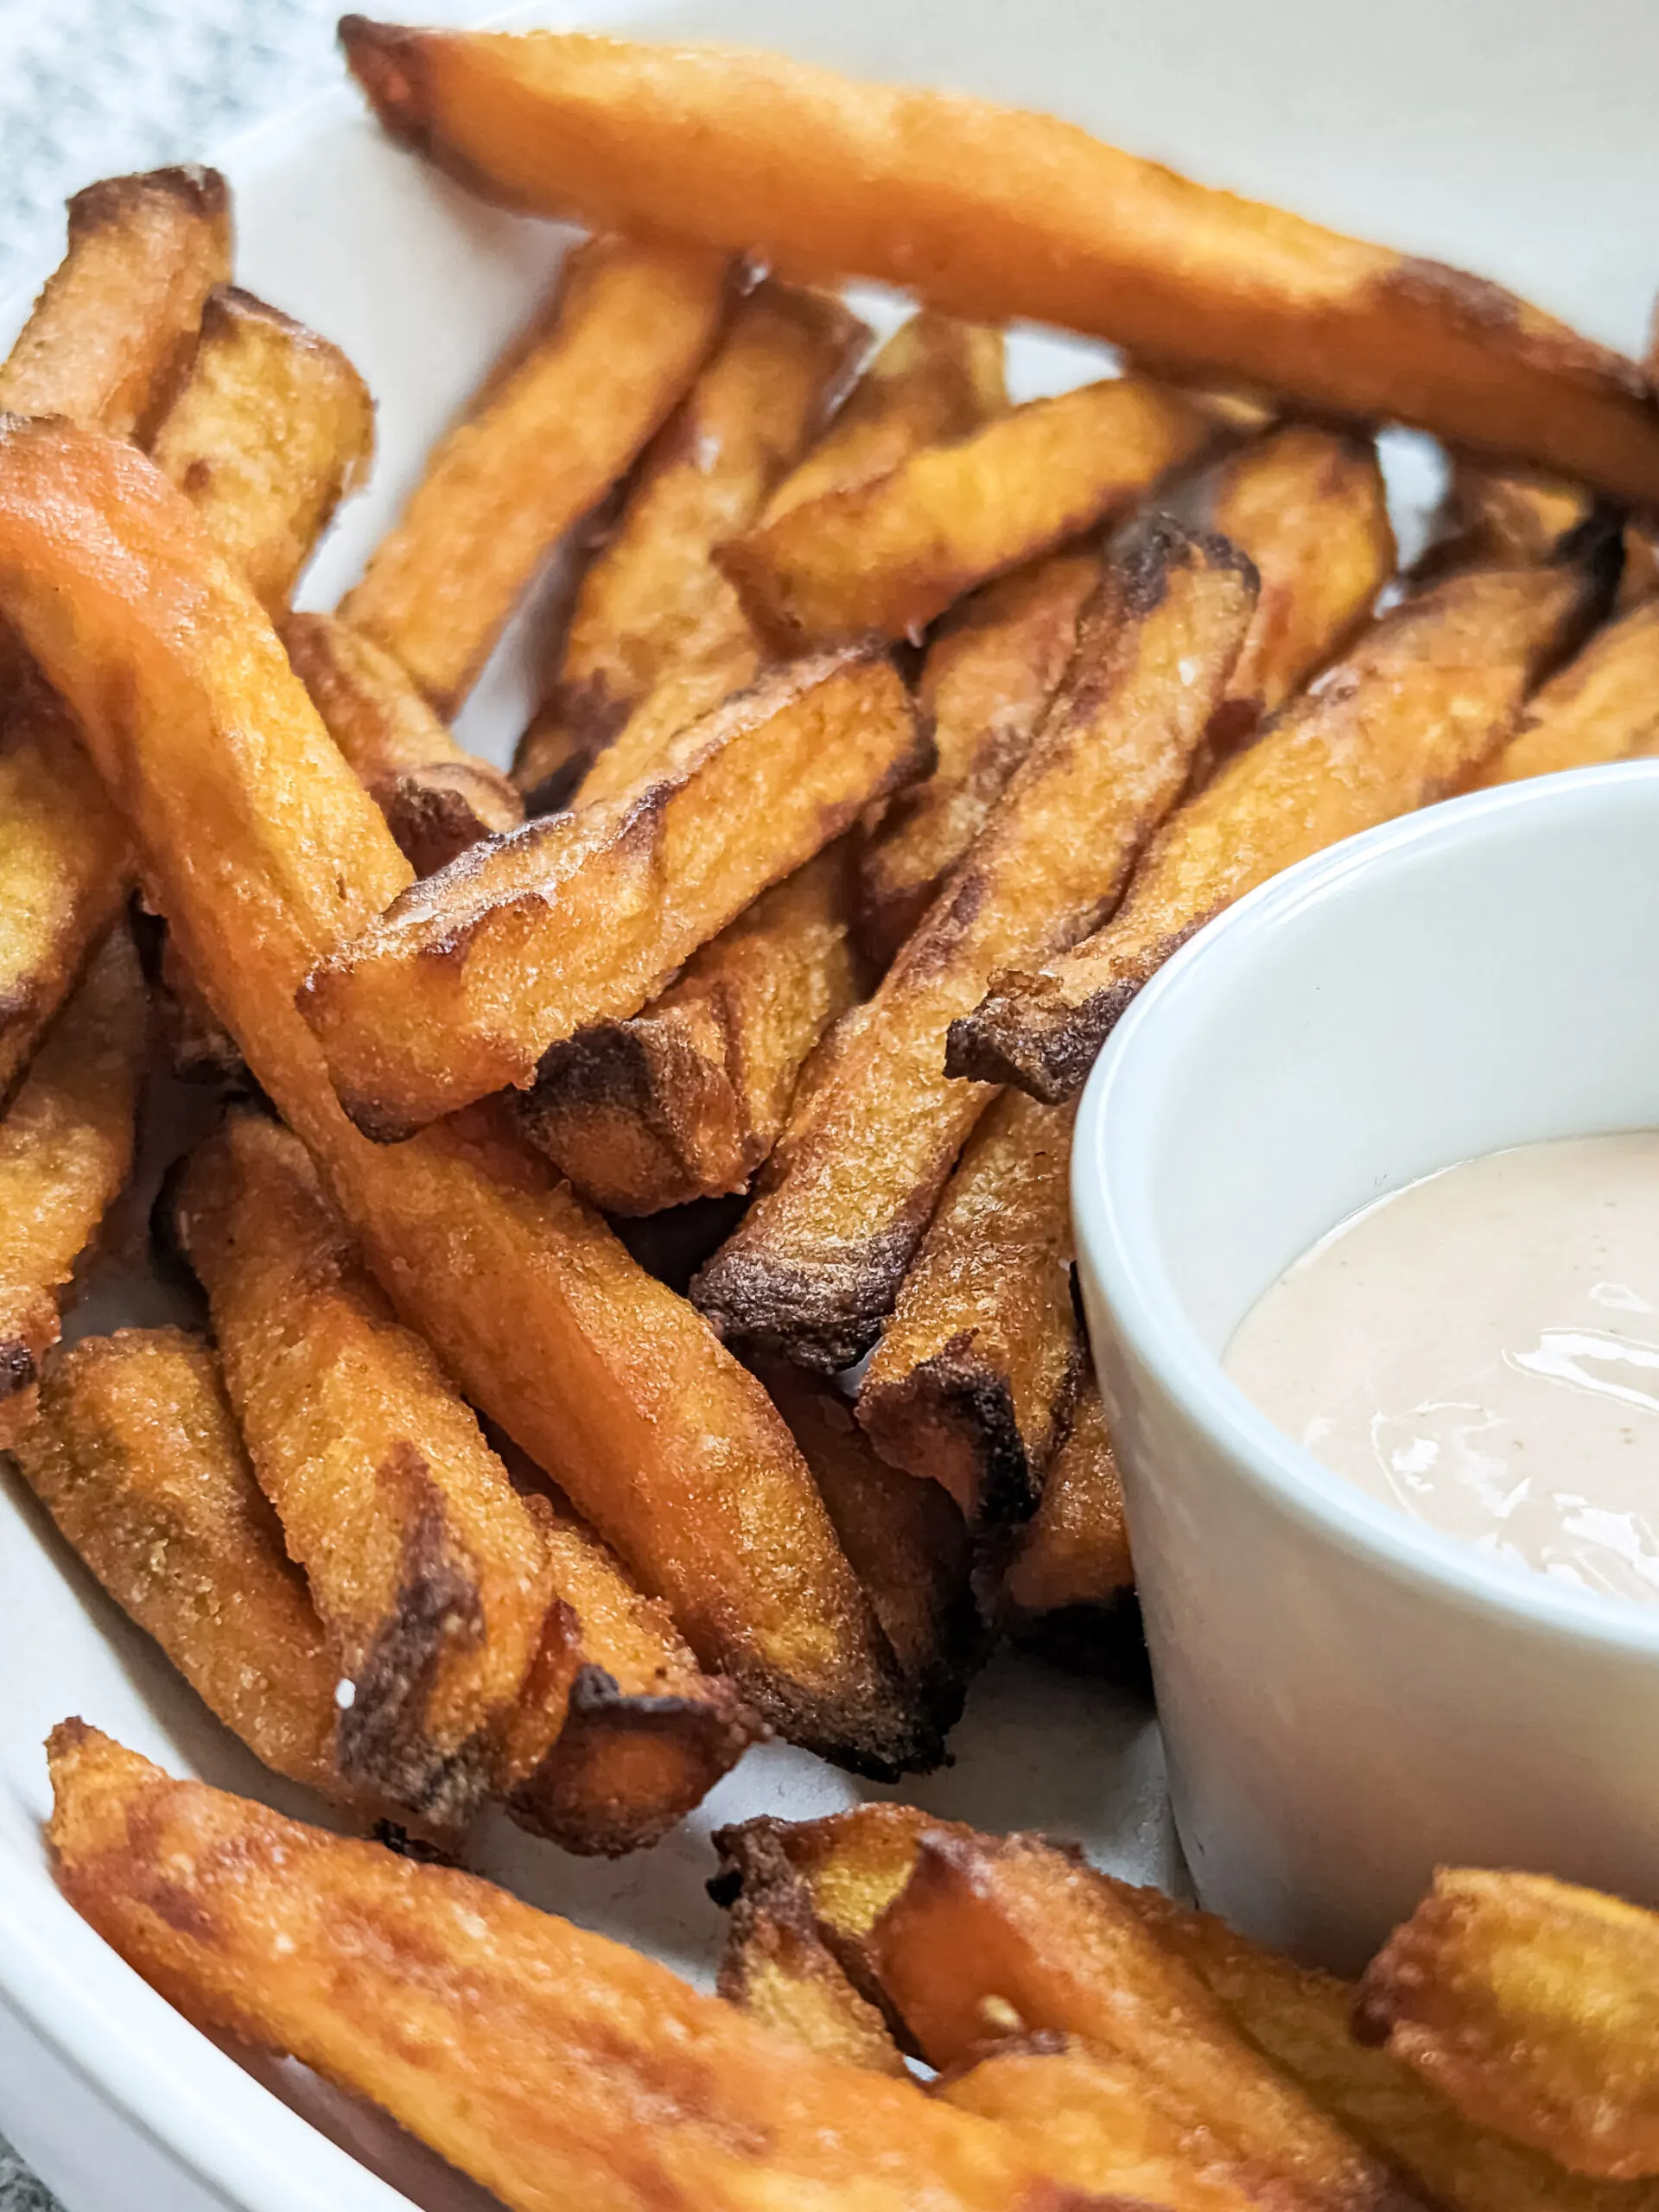 A close up of sweet potato fries and sauce.